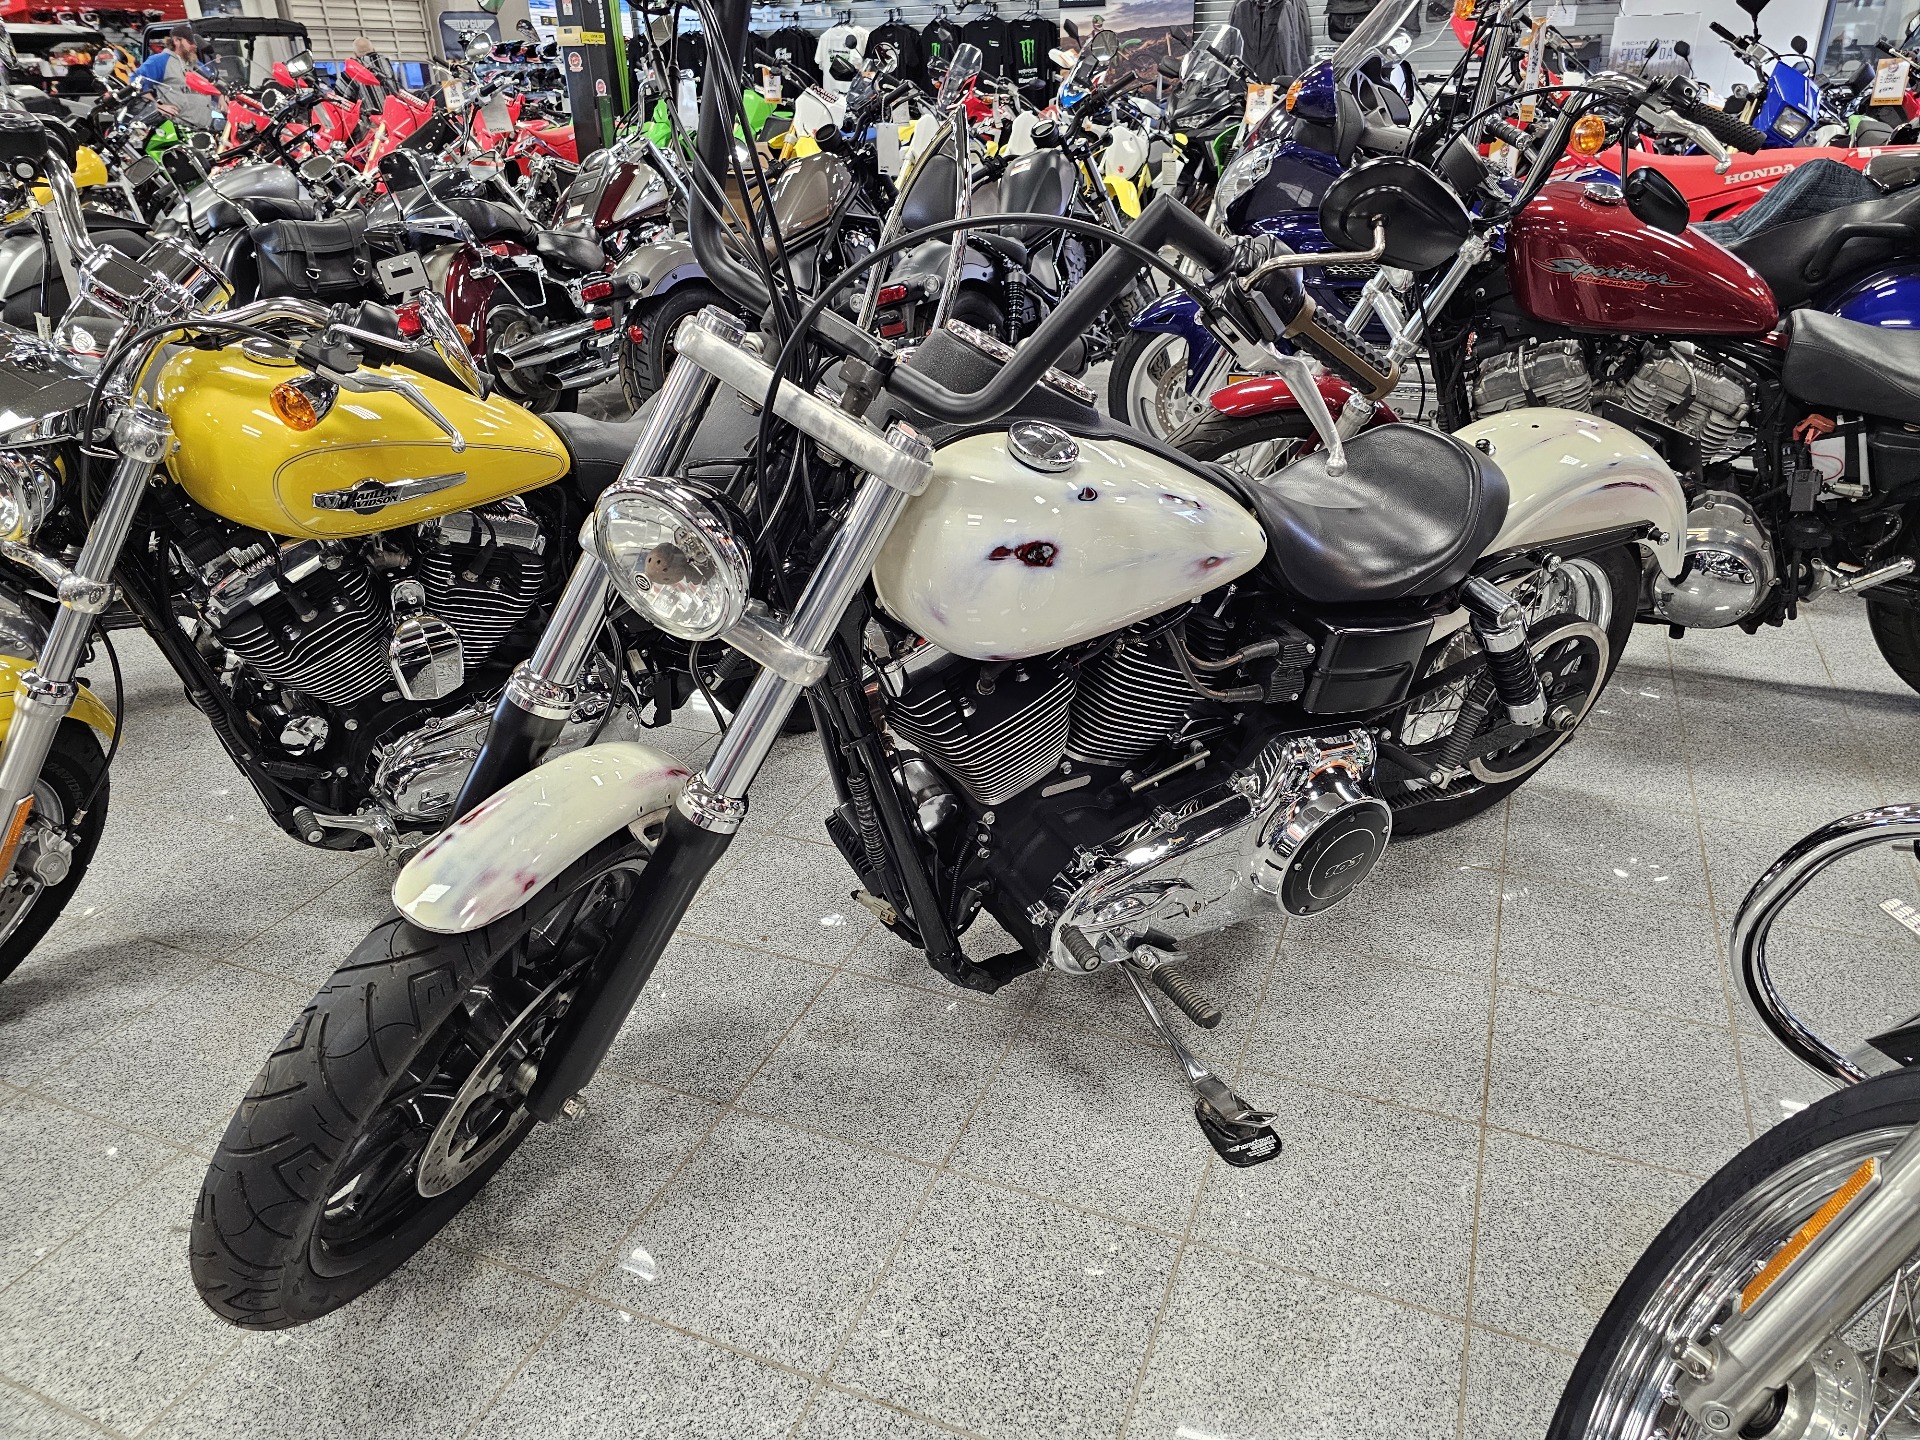 2017 Harley-Davidson Low Rider® in Marietta, Ohio - Photo 2